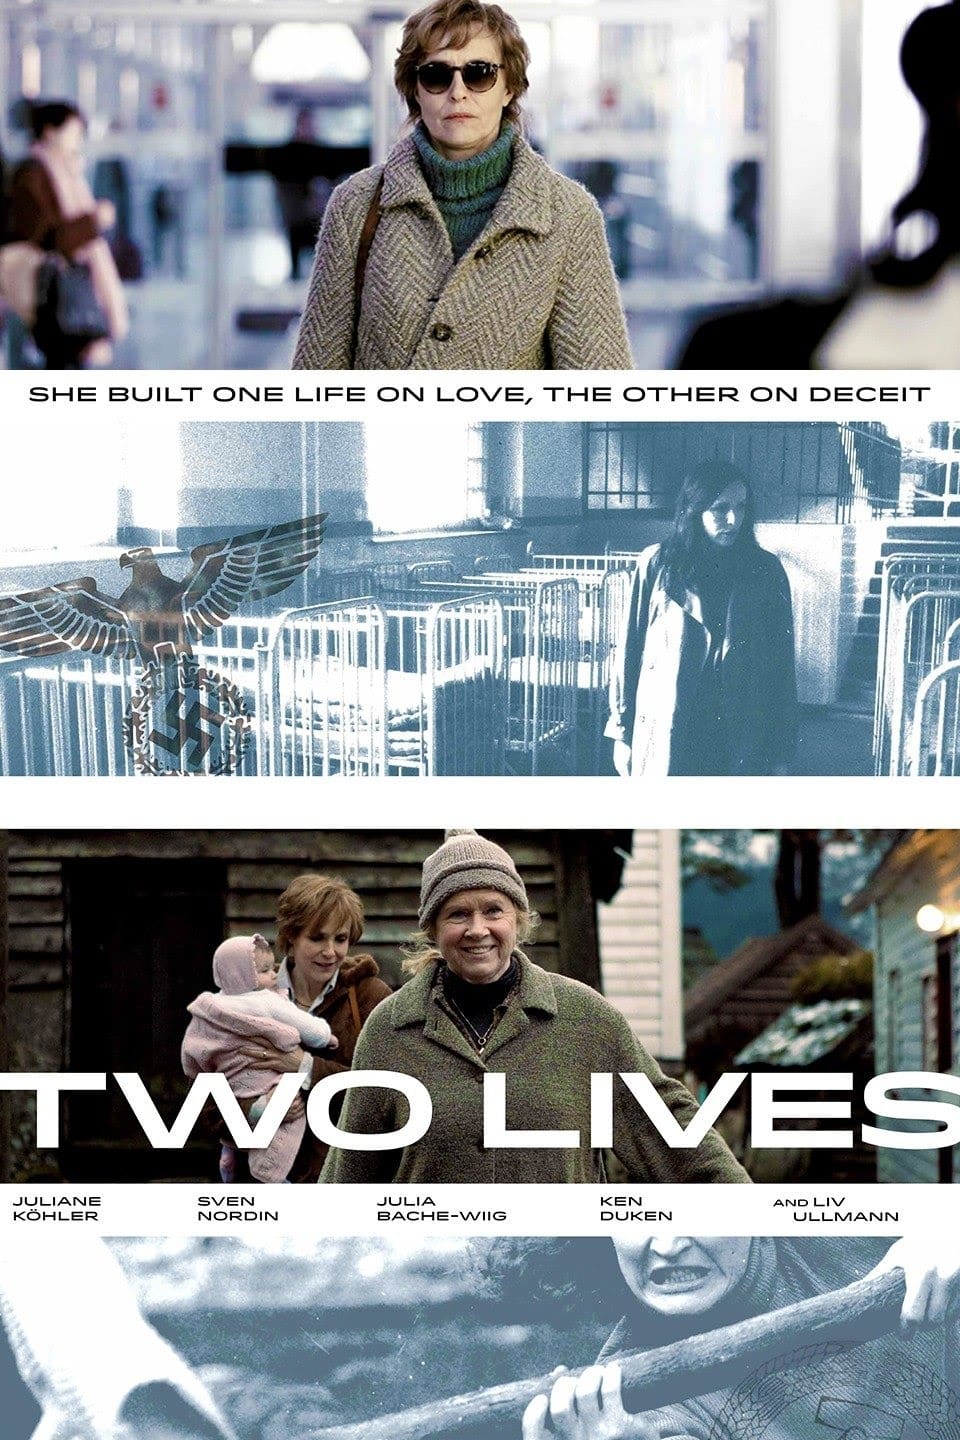 Dos vidas (2012)